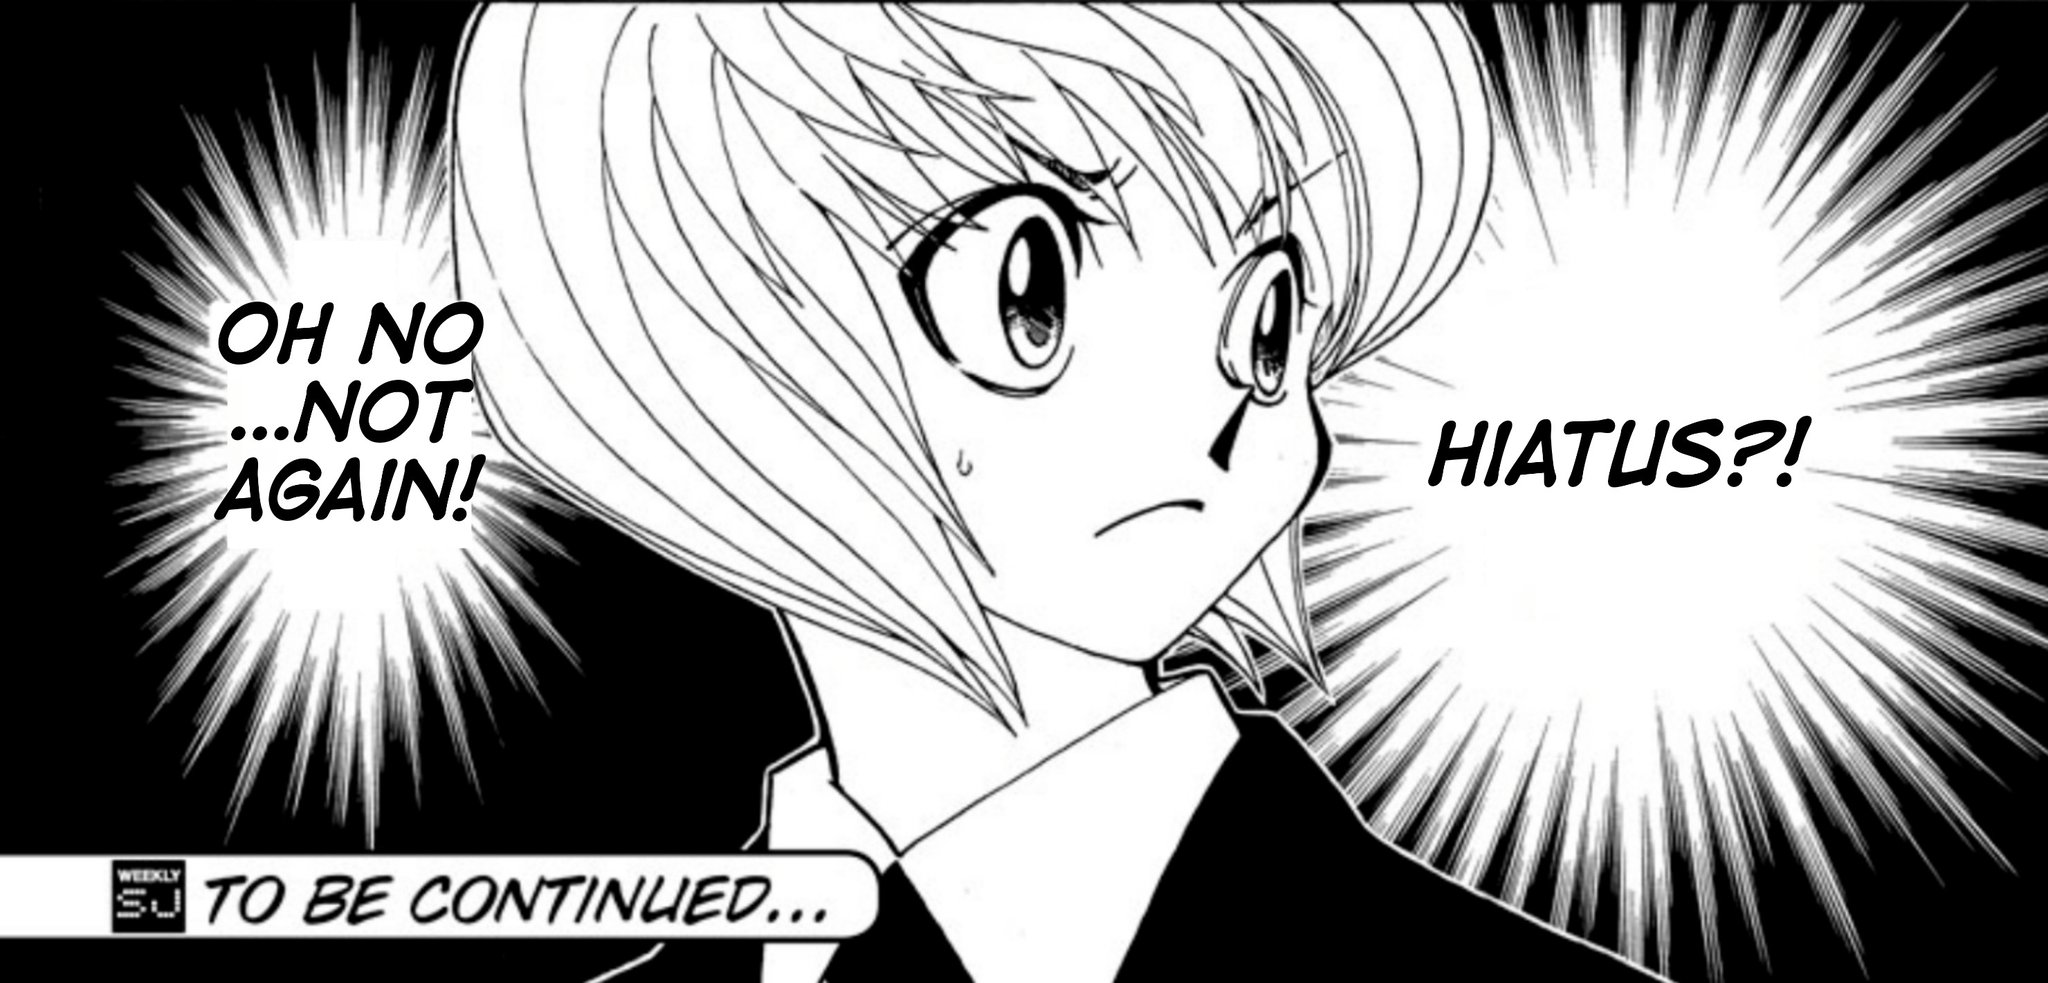 HUNTER x HUNTER' Manga on Hiatus Once Again